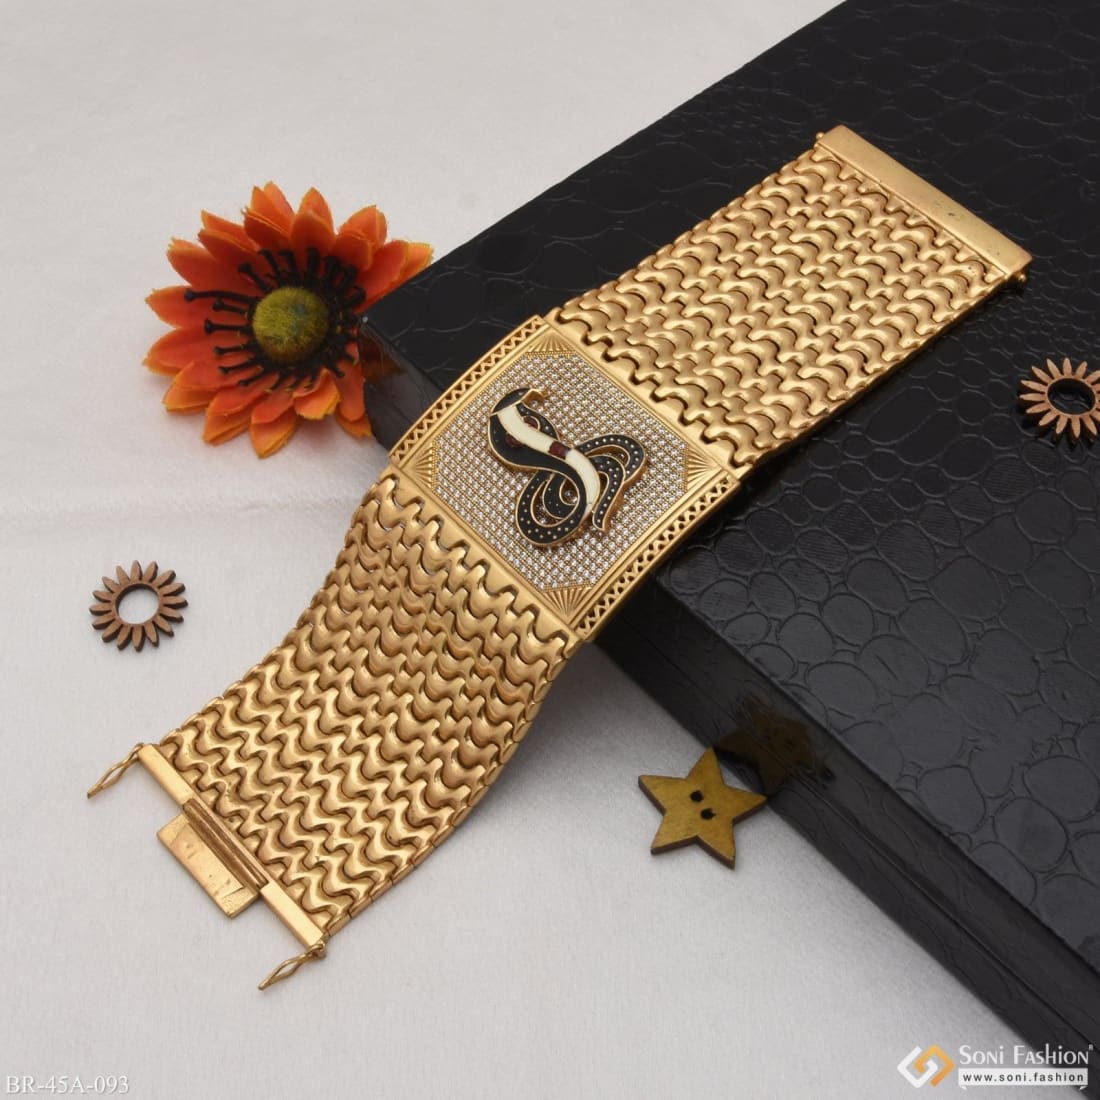 Japan Jewelry - K18 japan gold bracelet different sizes &... | Facebook